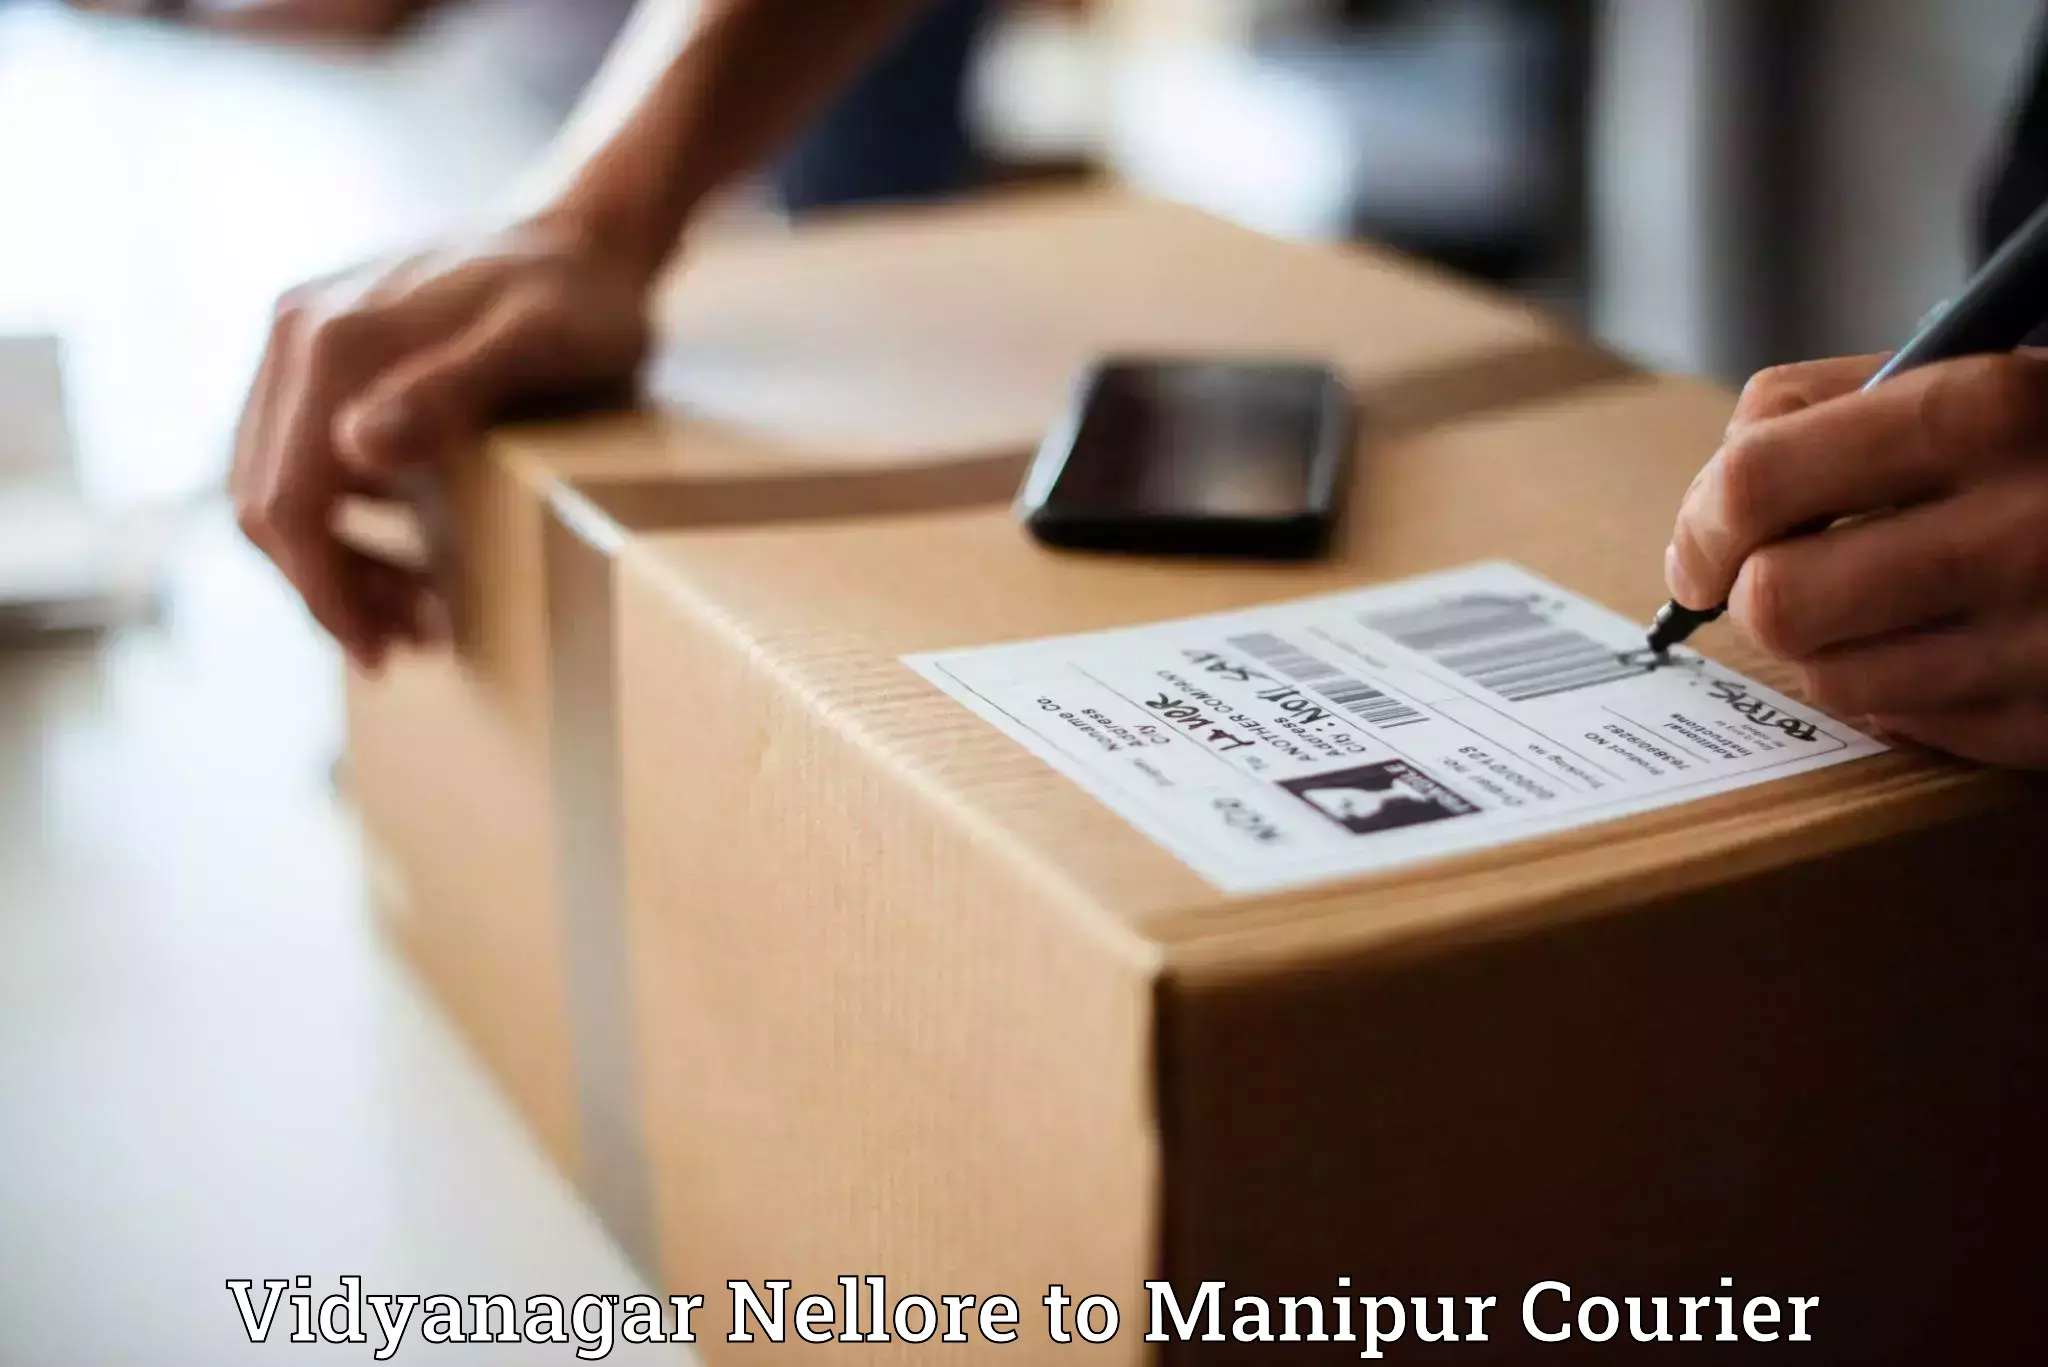 Overnight delivery services Vidyanagar Nellore to Manipur